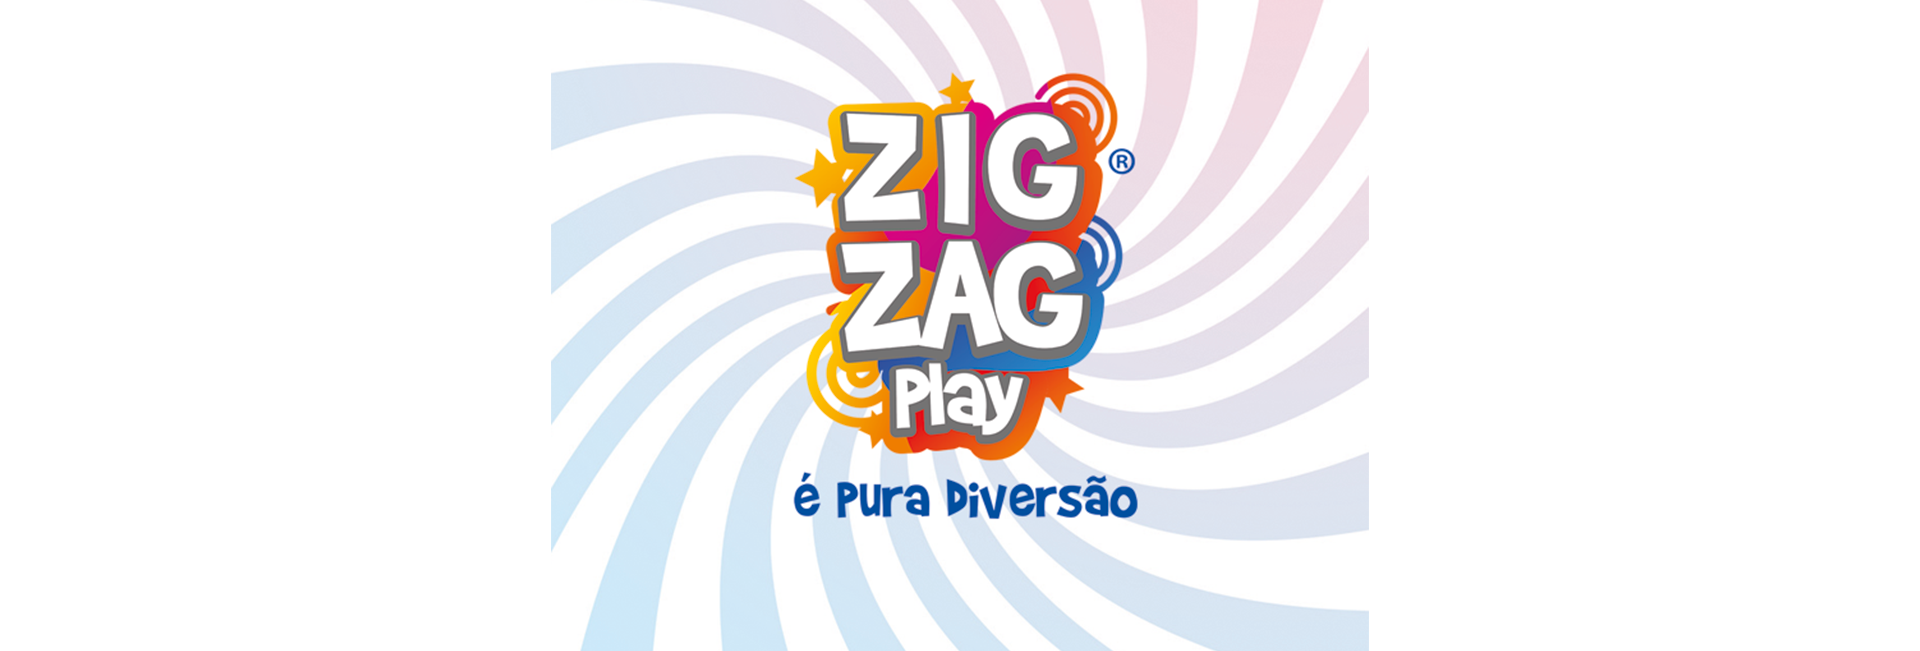 Lojas-Zig-zag-play